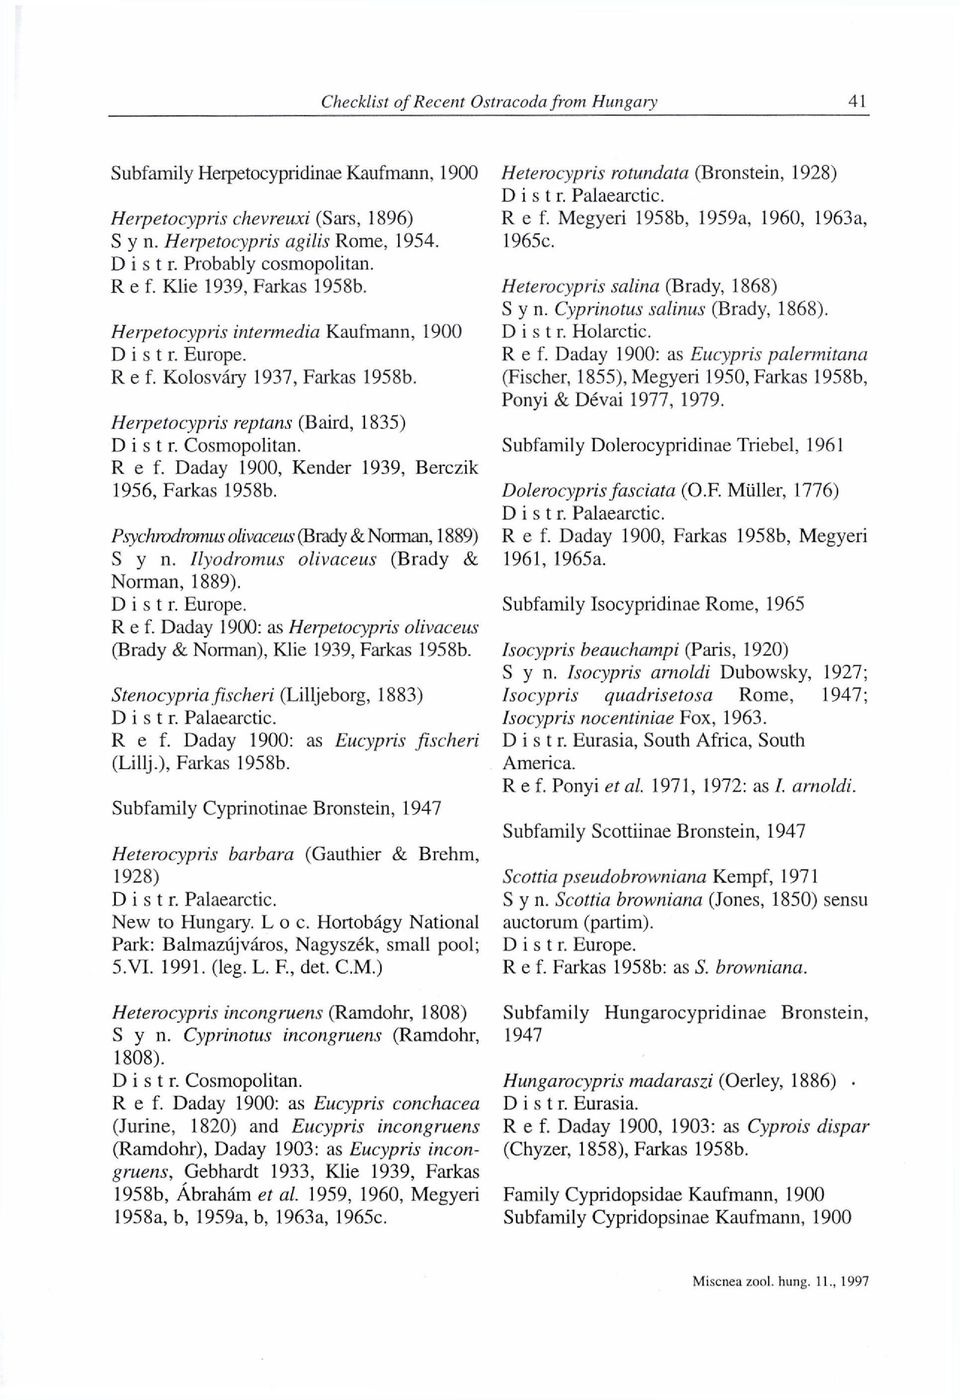 Psychrodromits olivaceus (Brady & Norman, 1889) S y n. Ilyodromus olivaceus (Brady & Norman, 1889). Ref. Daday 1900: as Herpetocypris olivaceus (Brady & Norman), Klie 1939, Farkas 1958b.